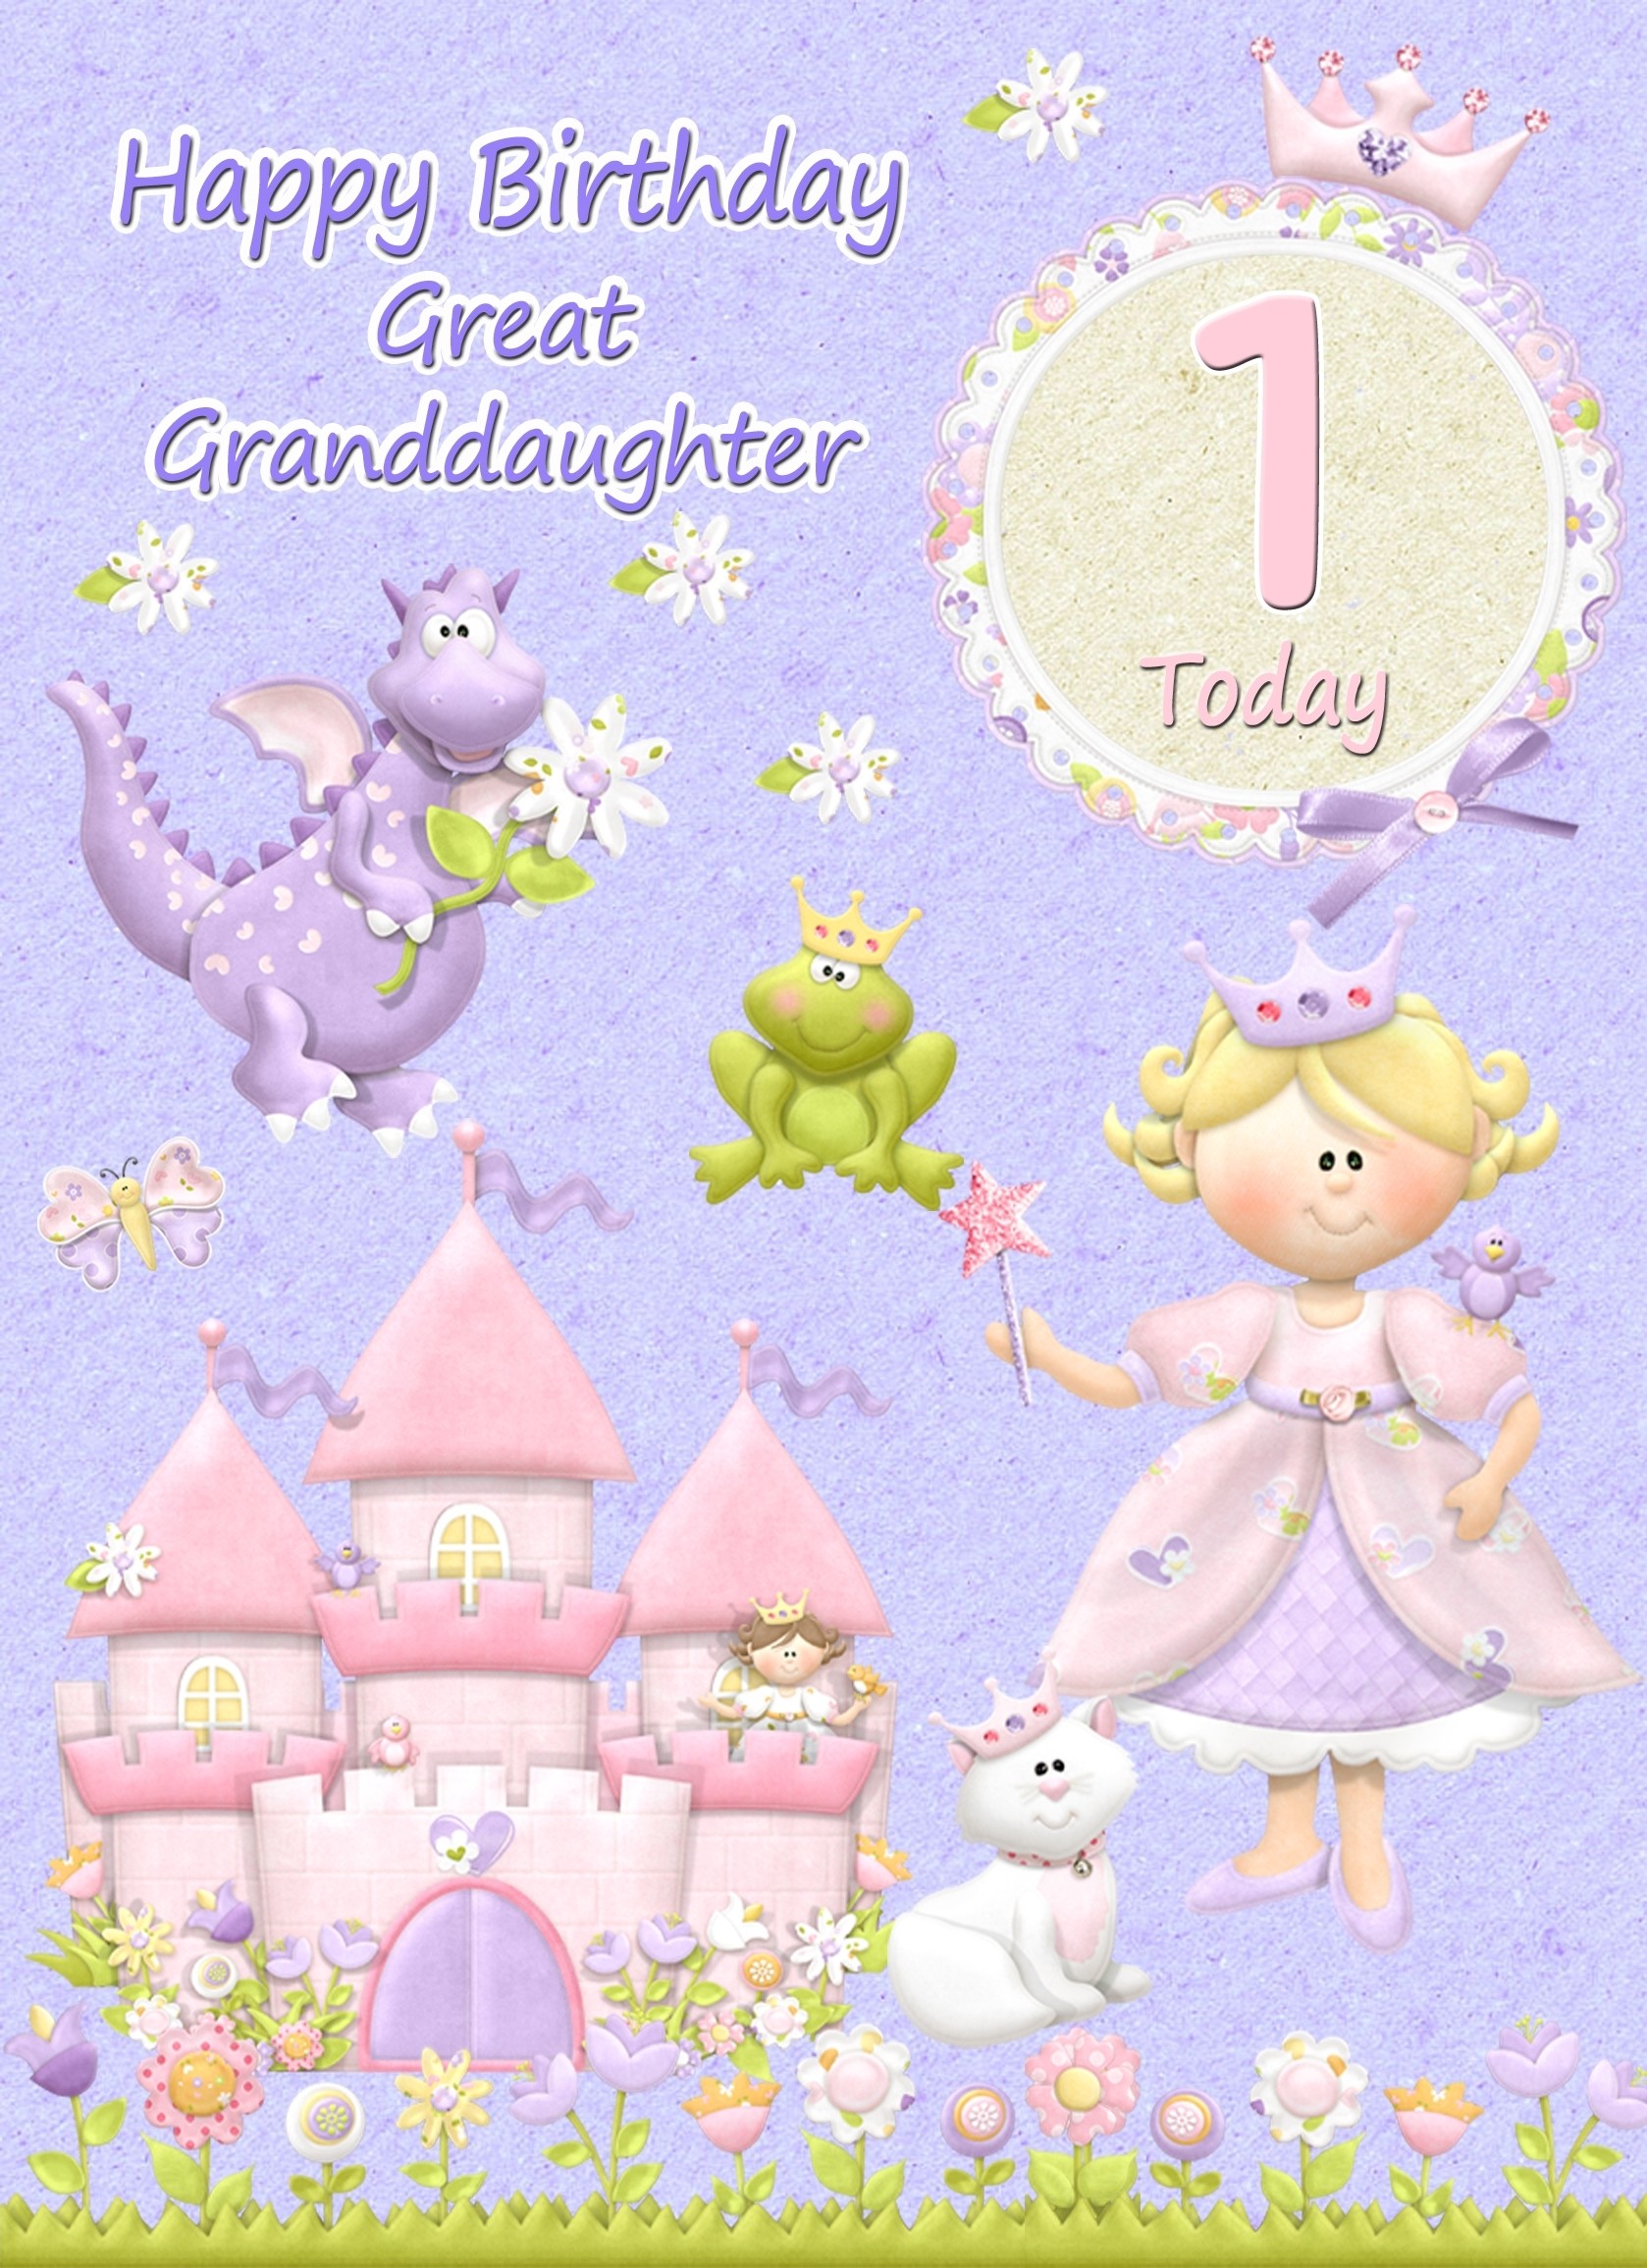 Kids 1st Birthday Princess Cartoon Card for Great Granddaughter